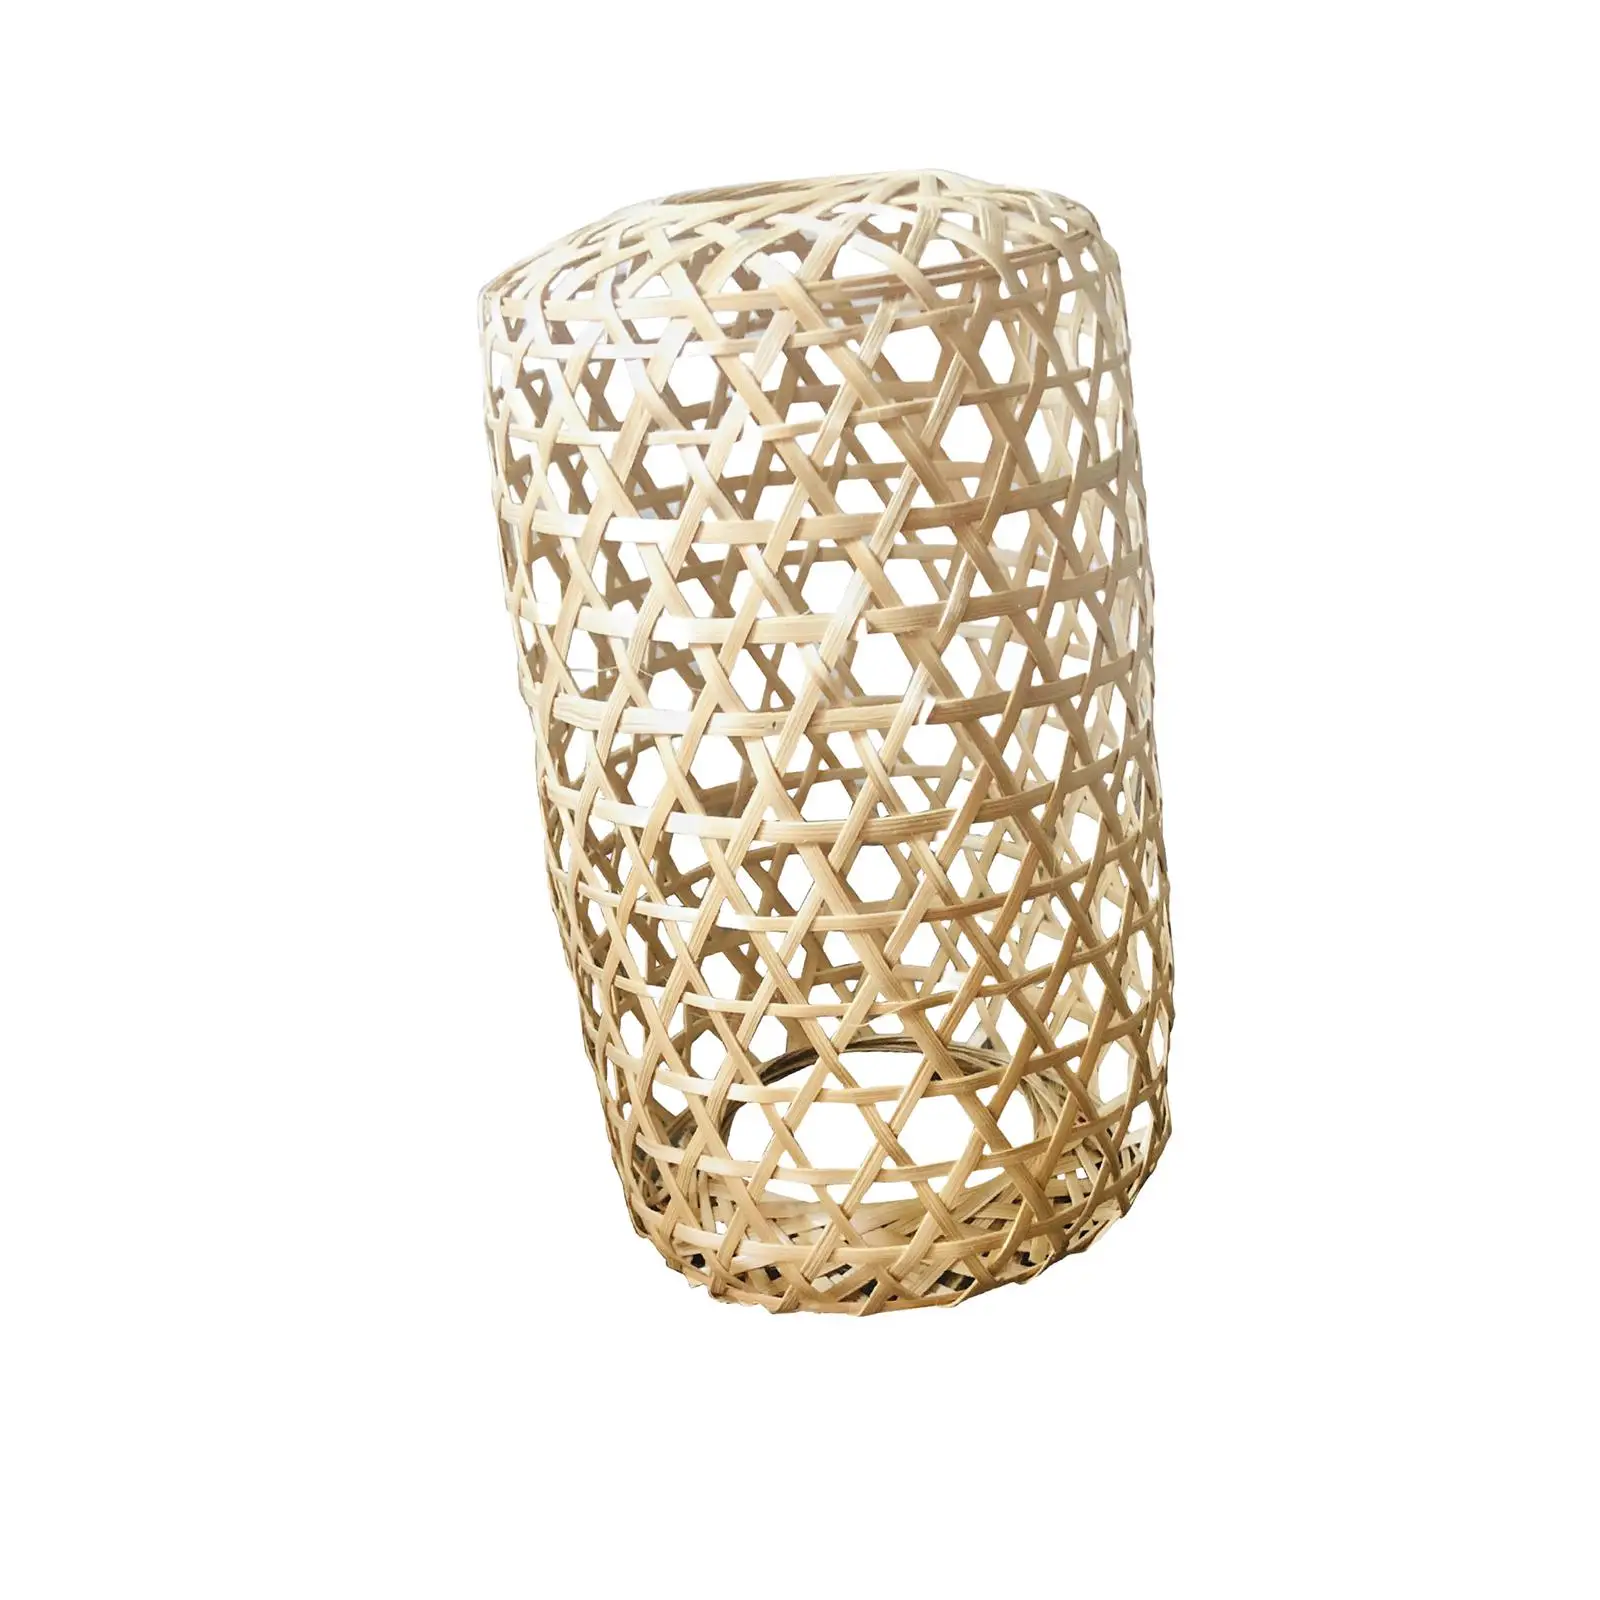 Vintage Bamboo Lamp Shade Decoration Rattan Lamp Shade Light